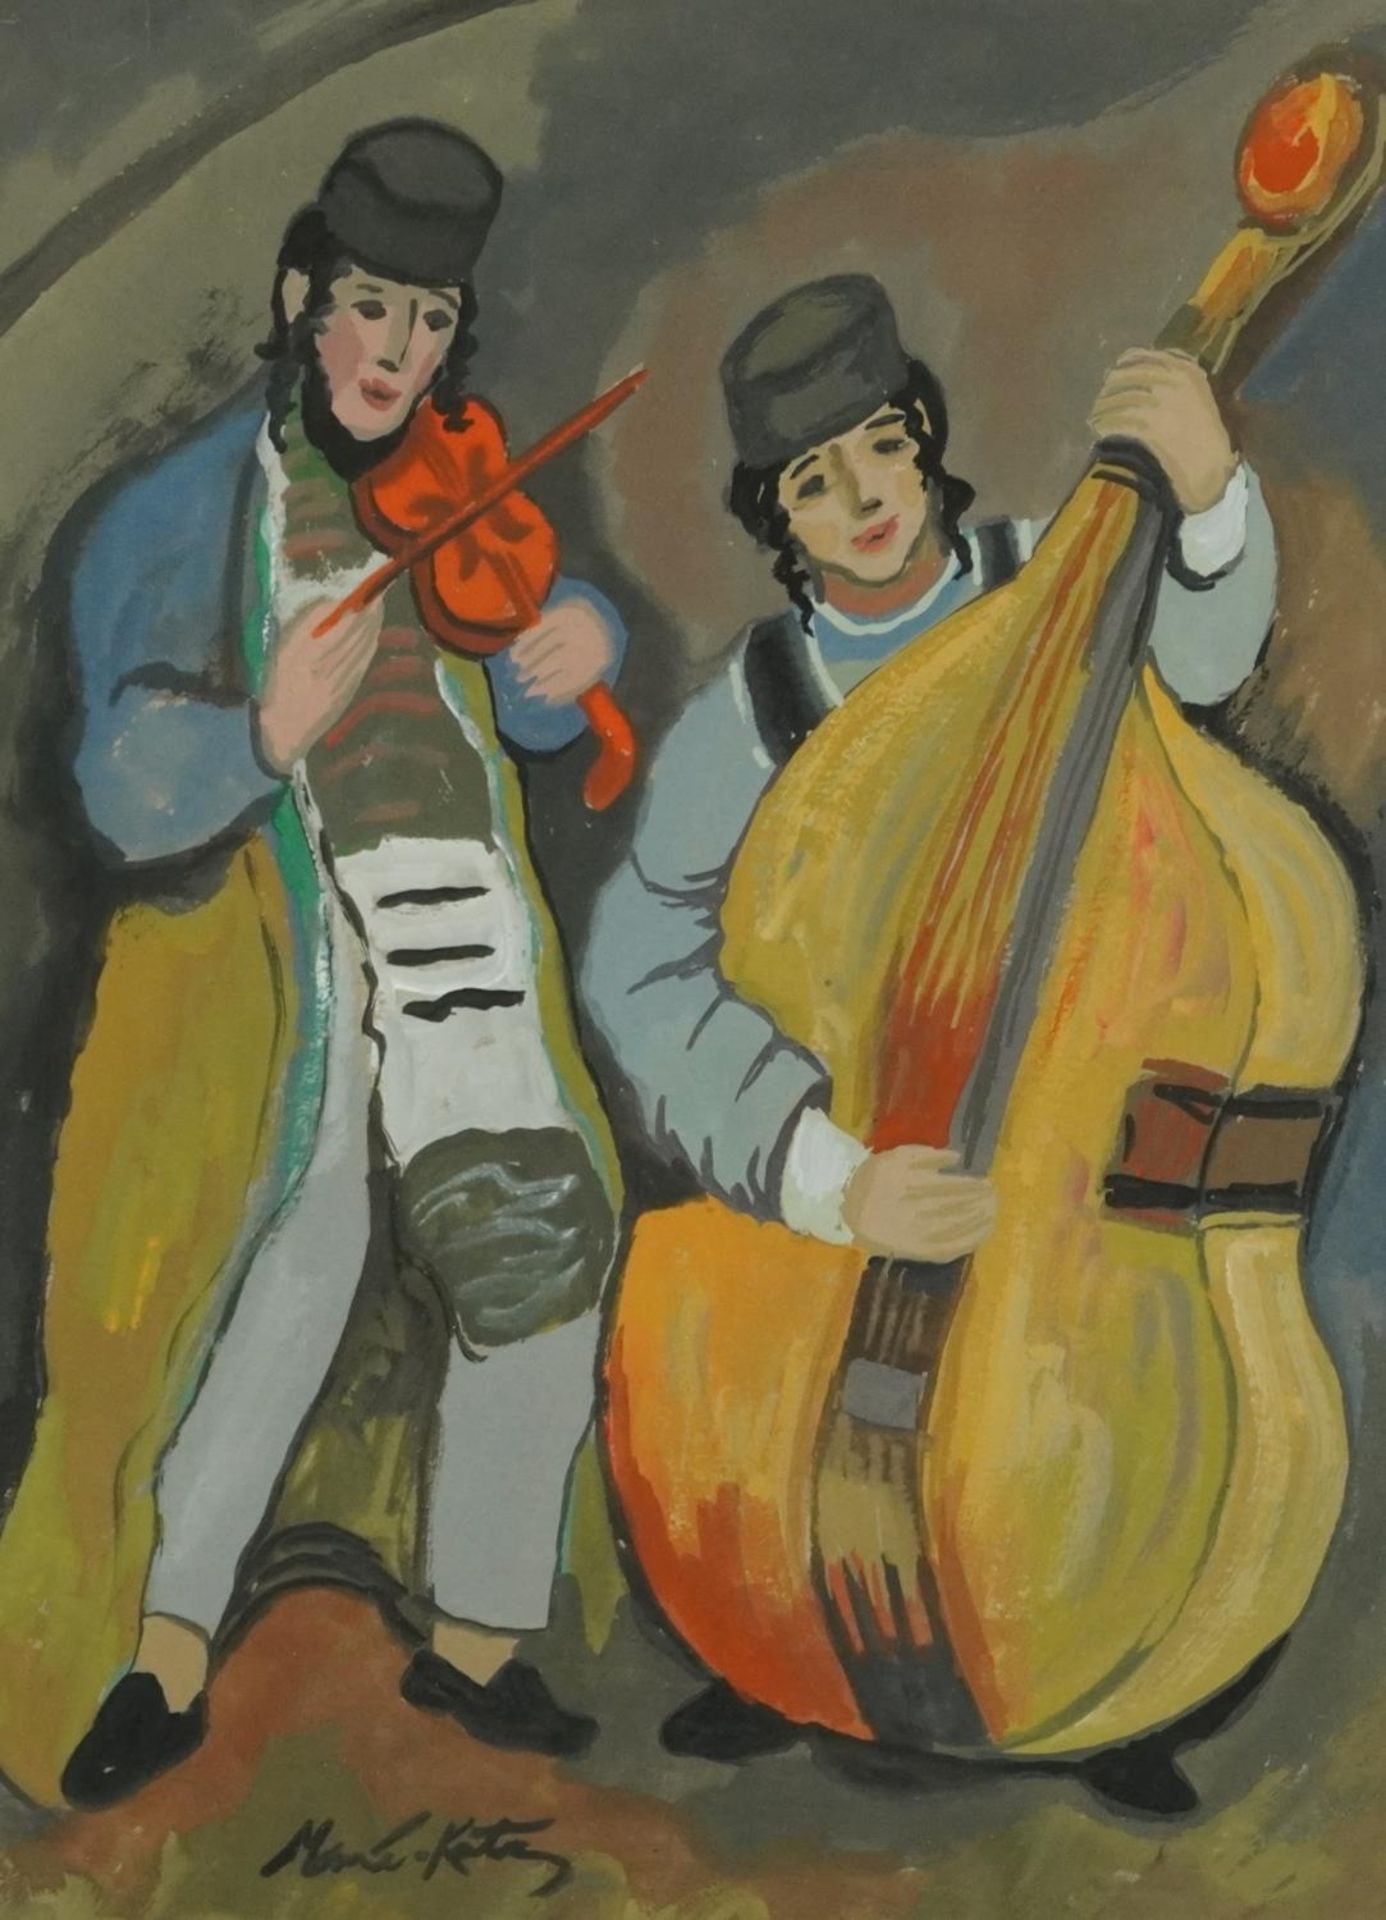 Manner of Emmanuel Mane-Katz - Two musicians, Israeli school gouache on paper, mounted, framed and